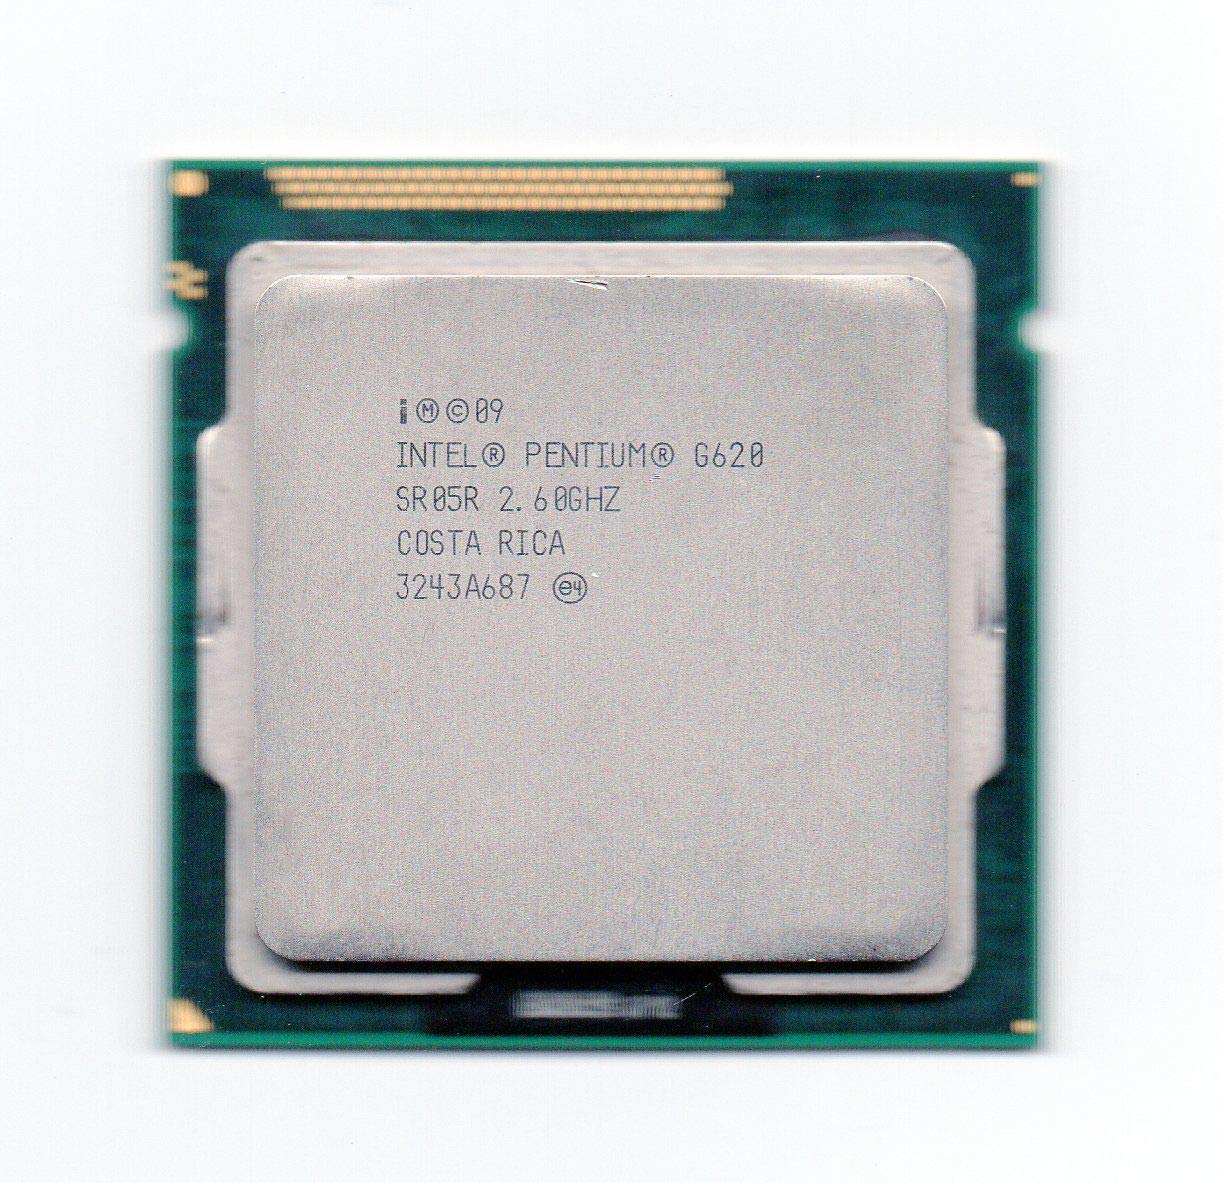 HP G620 2.60GHZ 3MM PROCESSOR